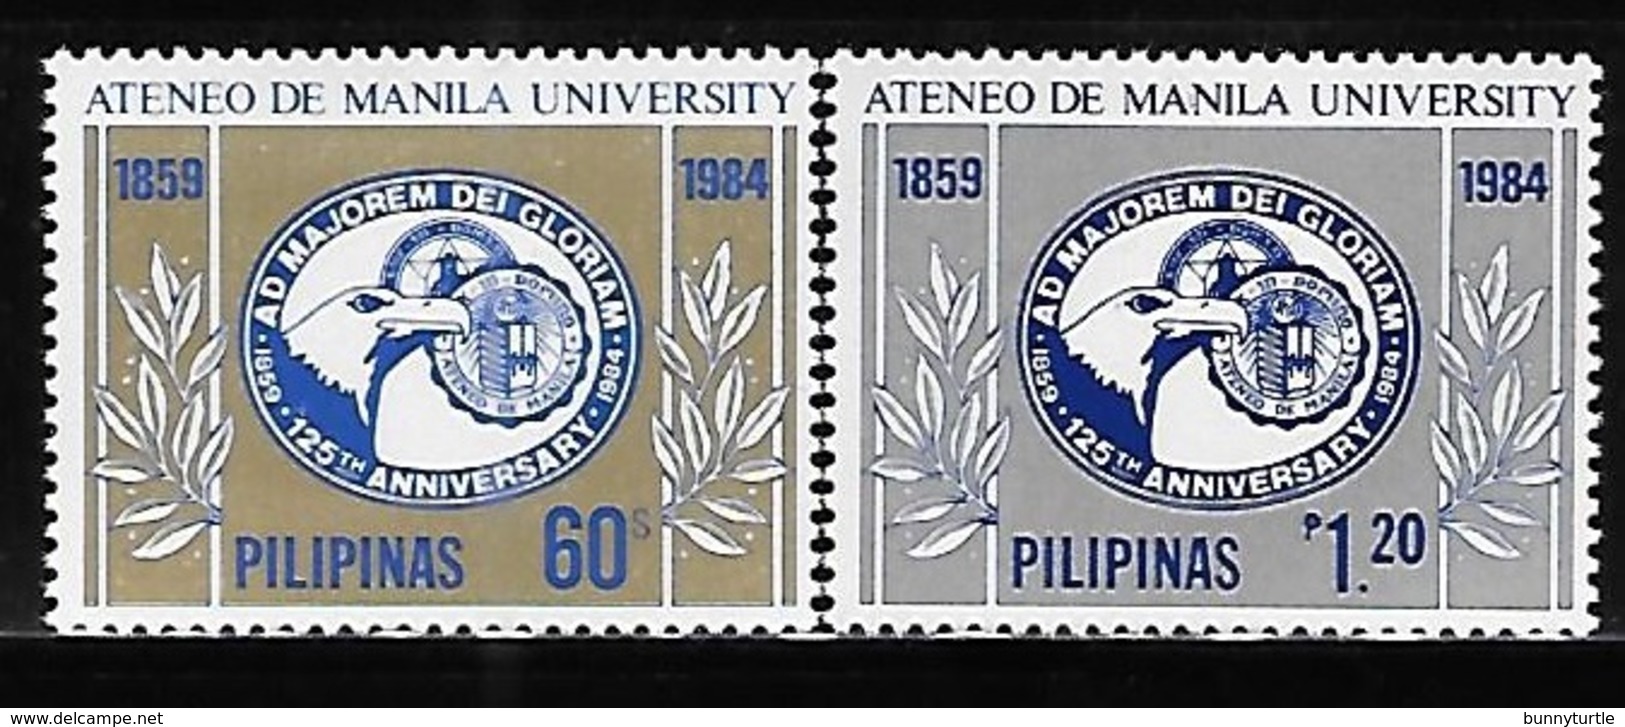 Philippines 1984 Ateneo De Manila University MNH - Philippines